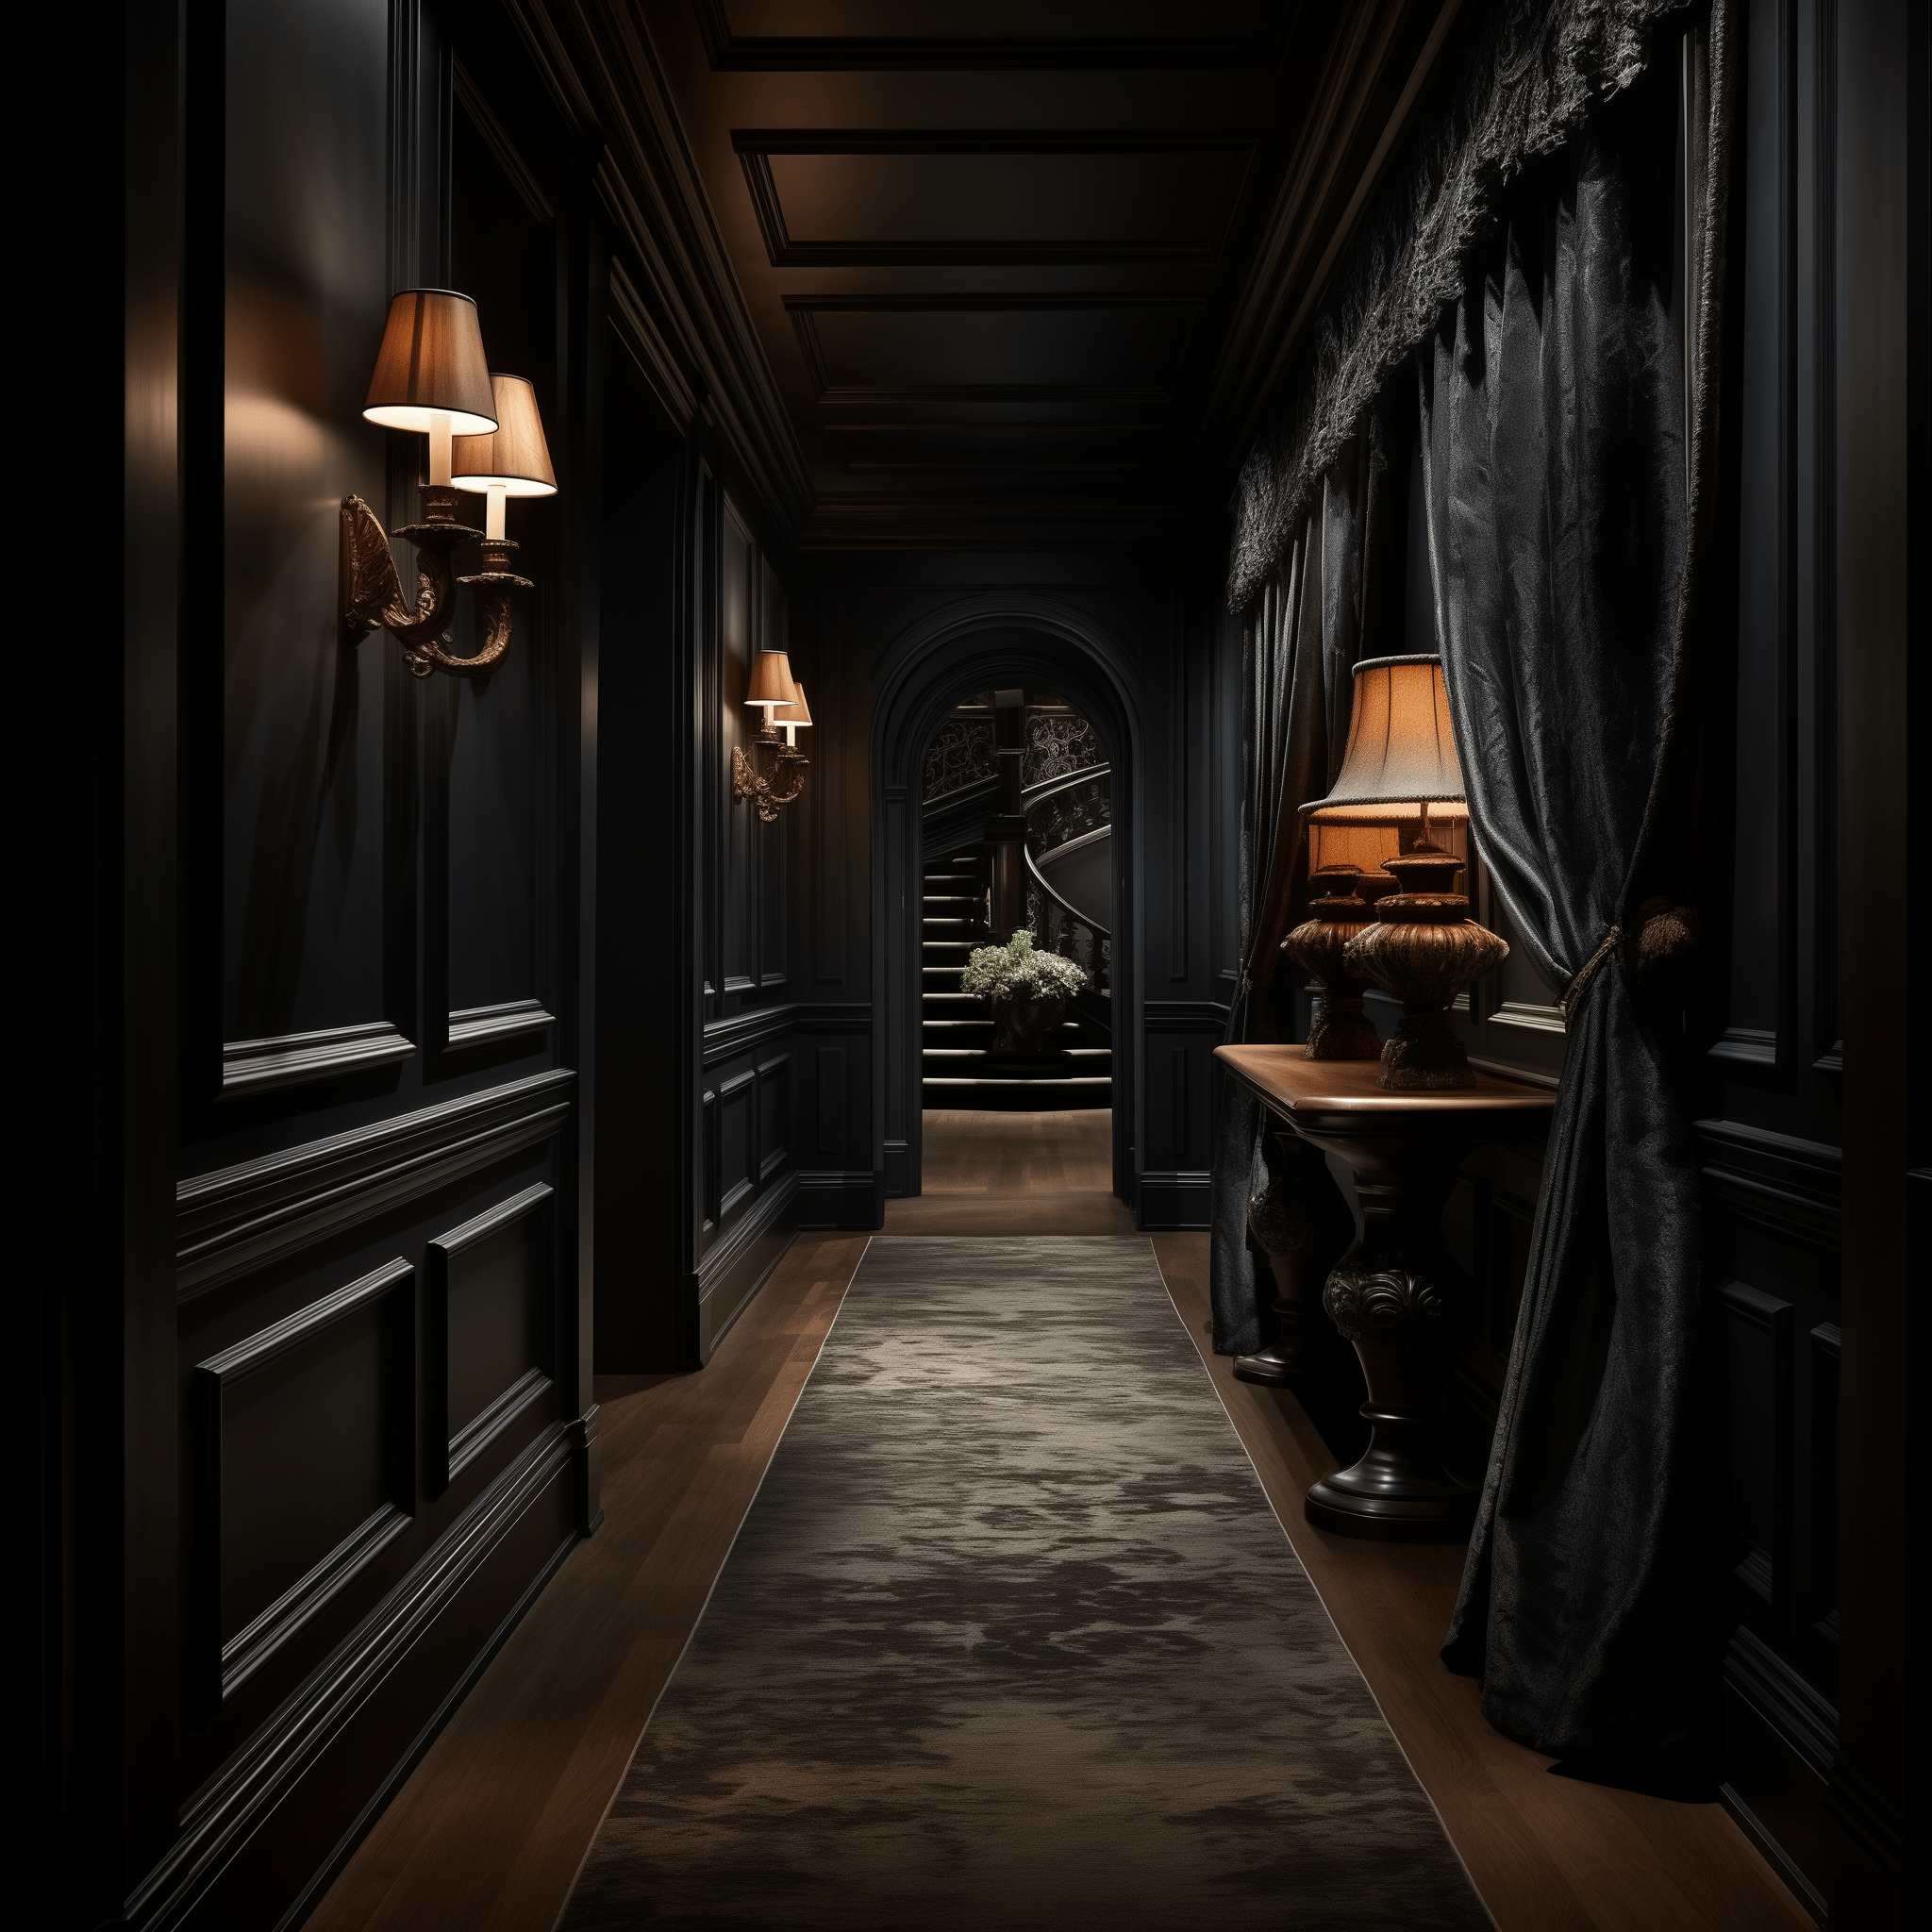 dark hallway interior design ideas inspiration decor